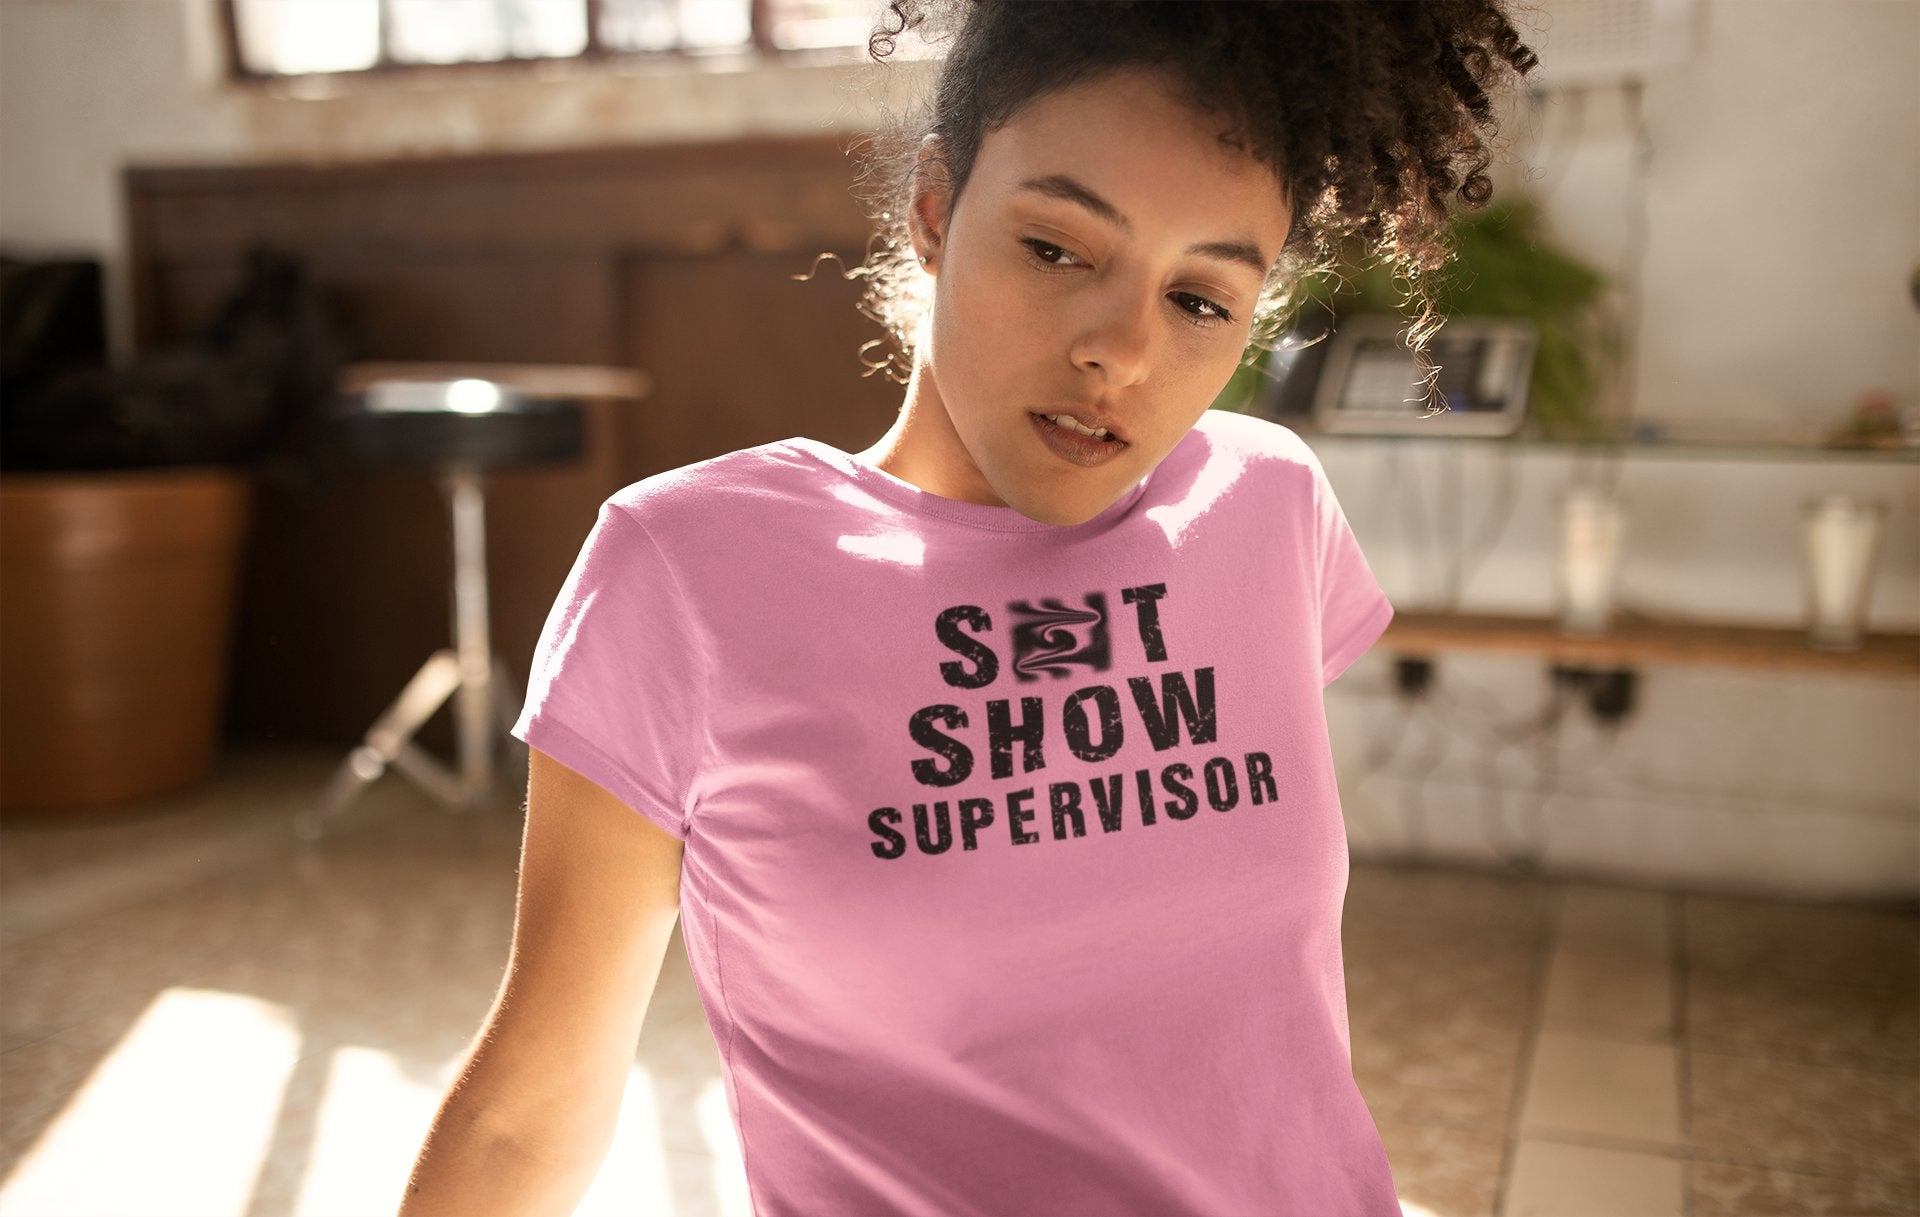 CrazyYetiClothing, CYC, S**t Show Supervisor (Women's Softstyle Tee, Censored), T-Shirt